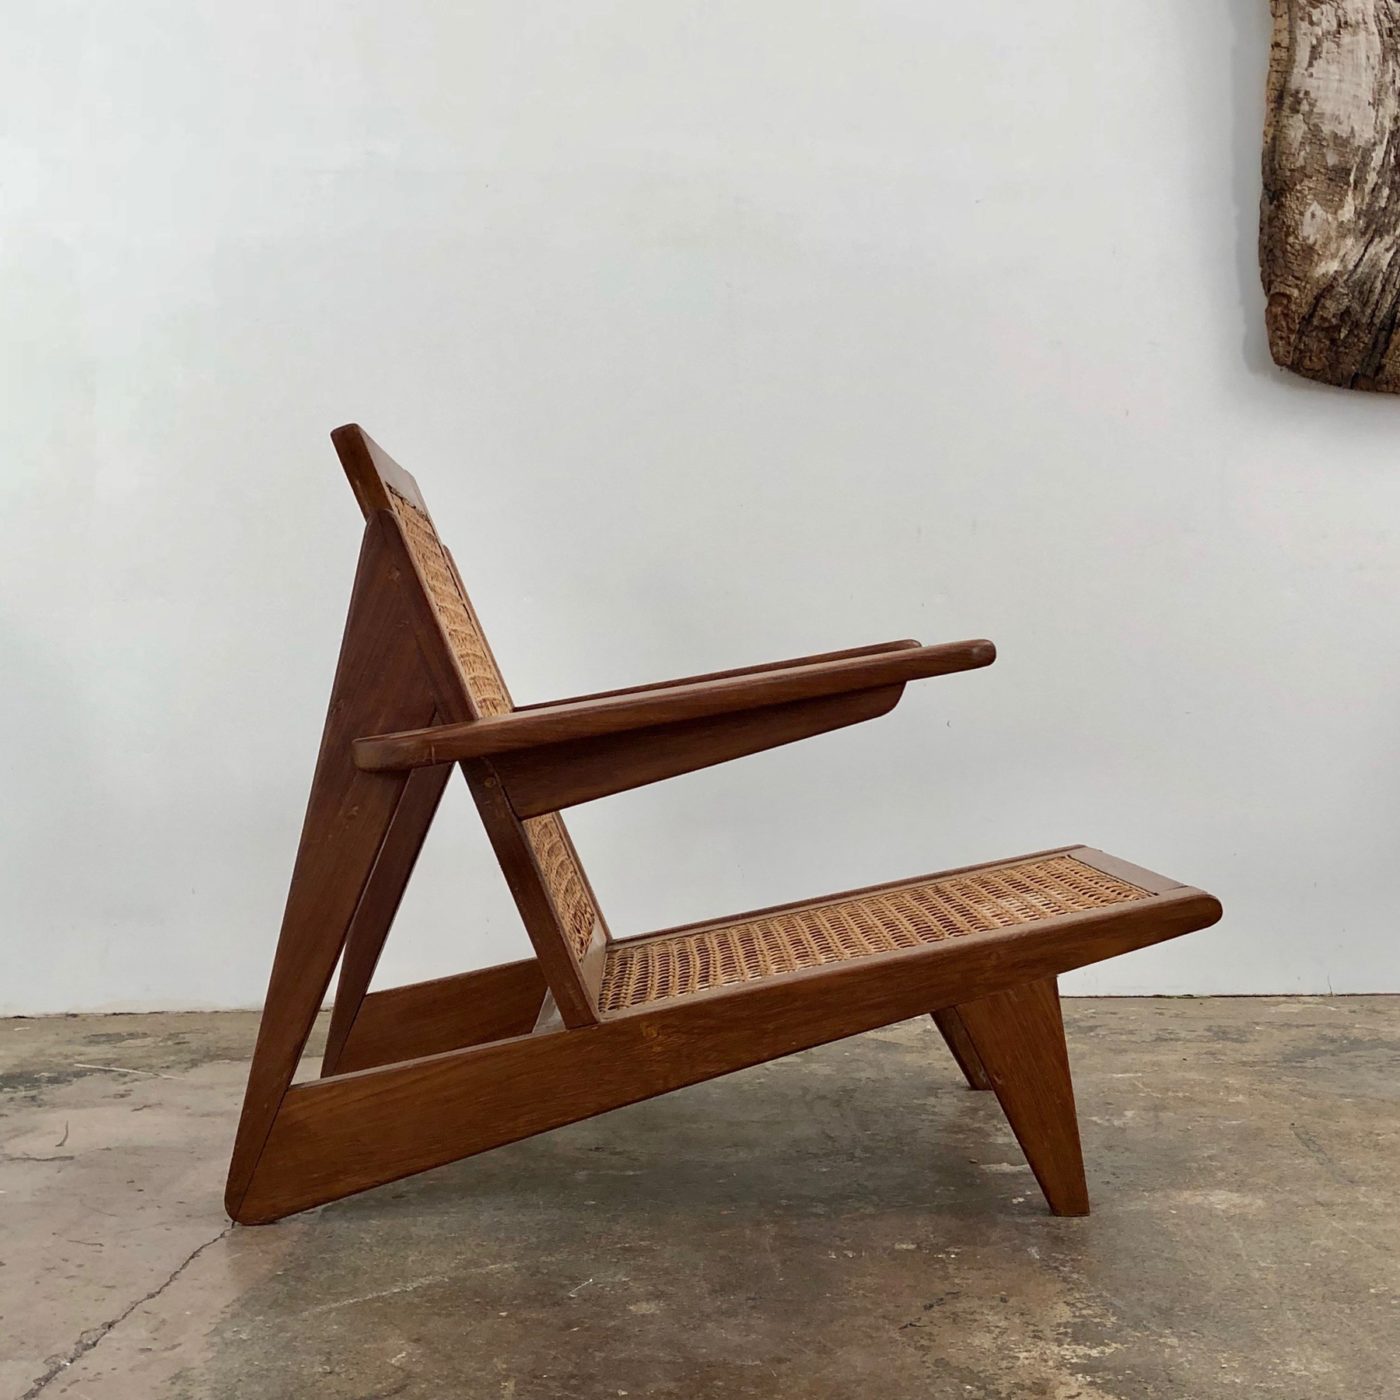 brazilian-cane-chairs0002